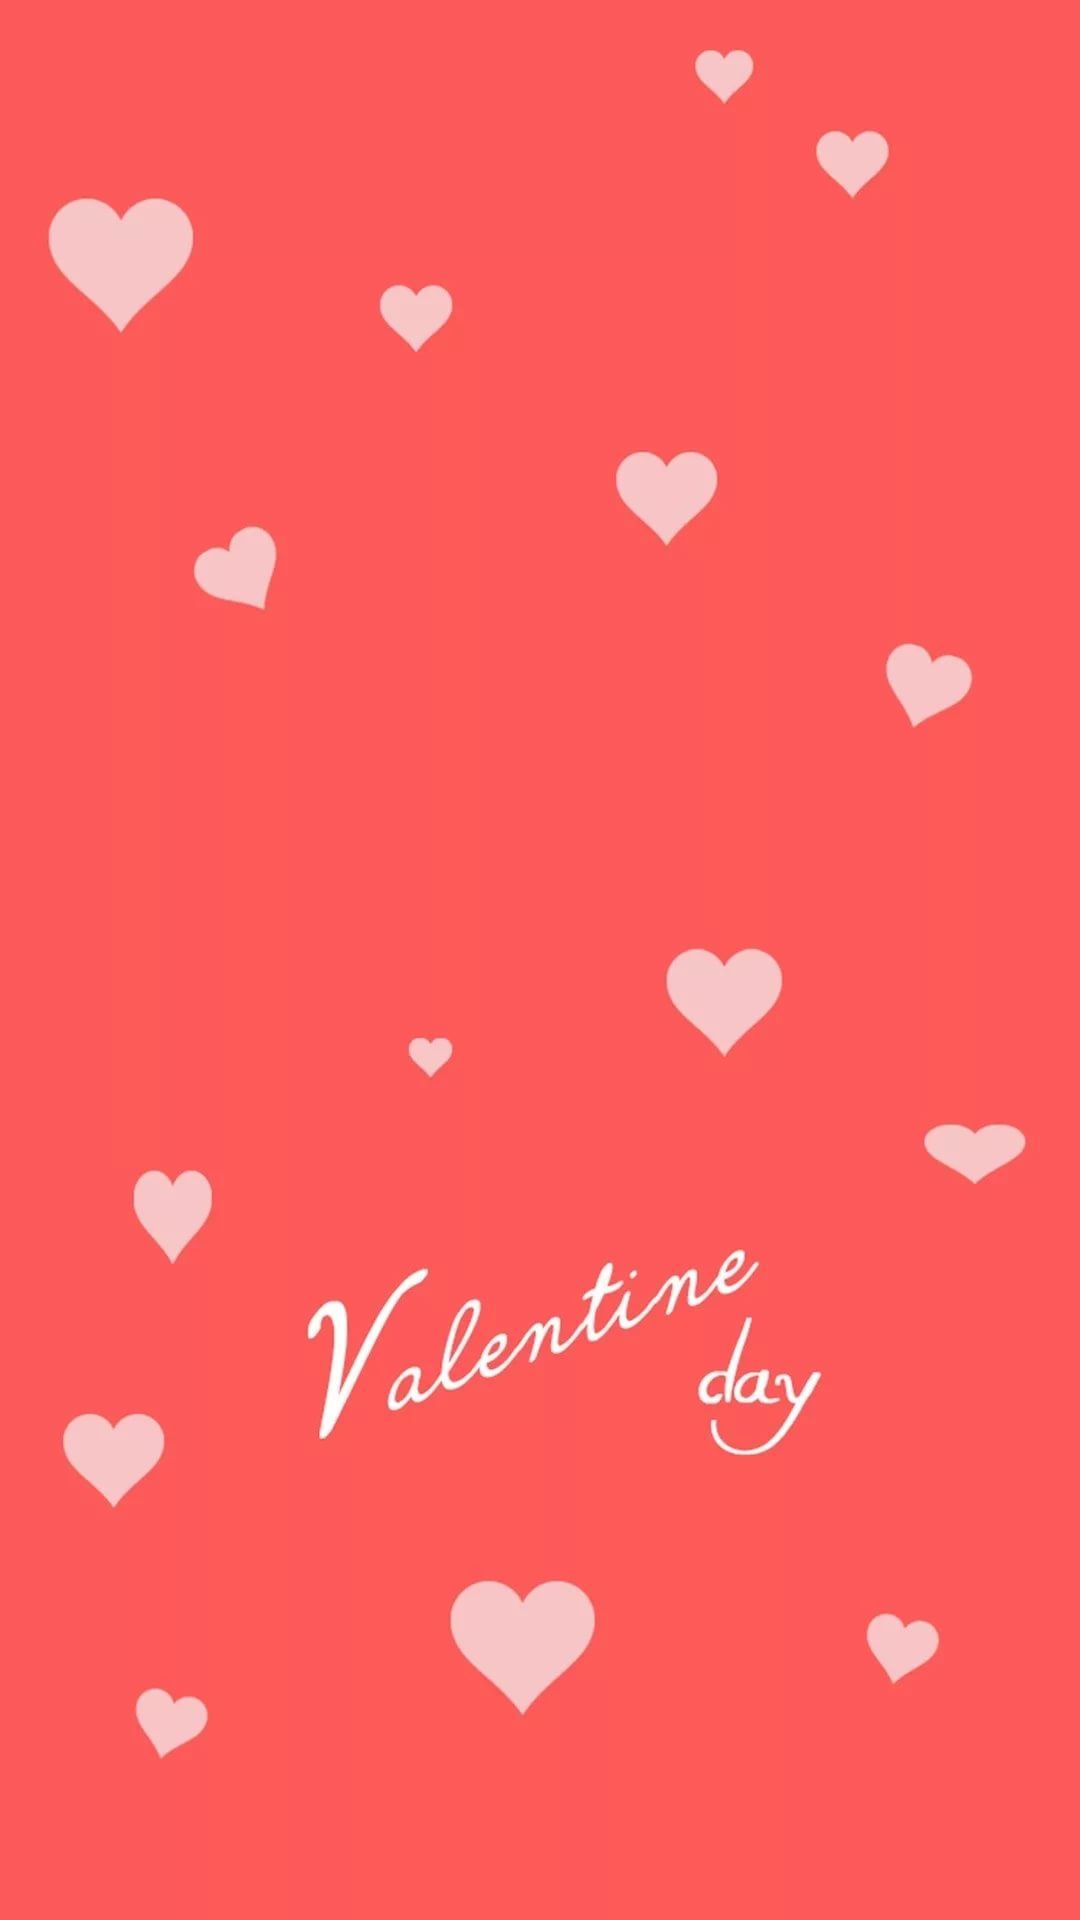 Valentine's Day iPhone 5 wallpaper